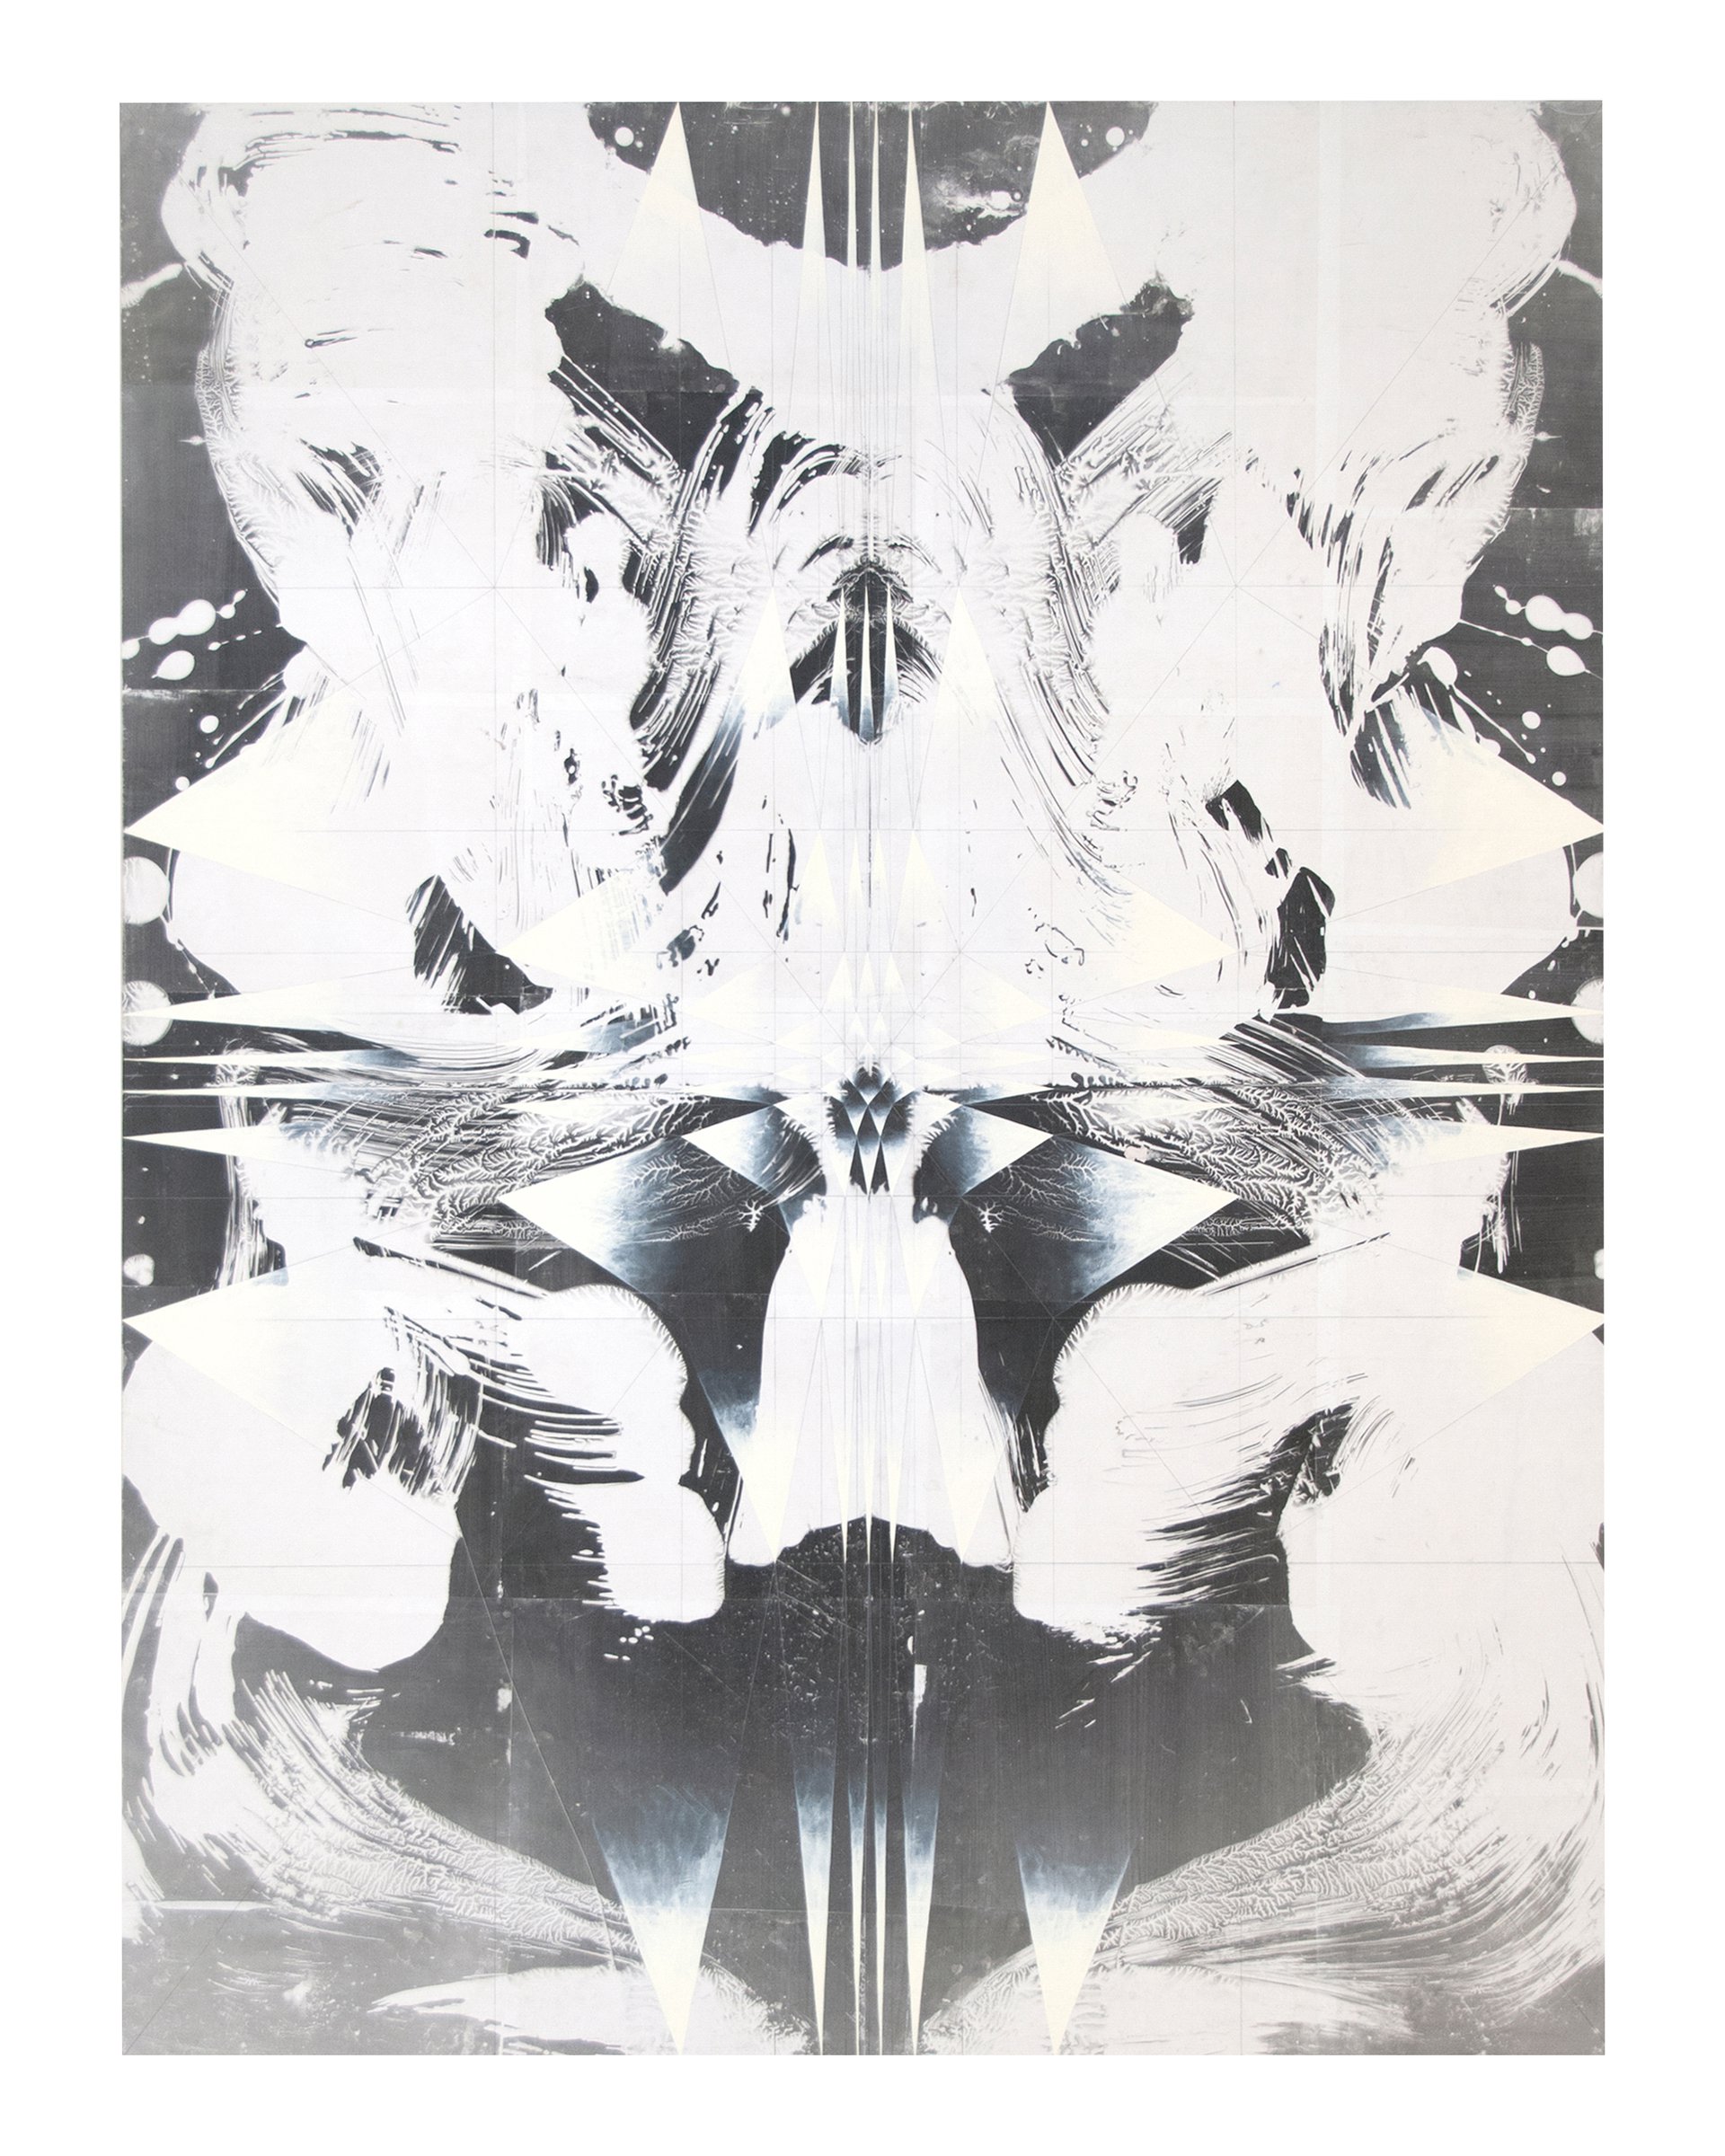 Tillman KaiserUntitled, 2015Silvergelatine, eggtempera and oil on paper on wood180 × 140 cm